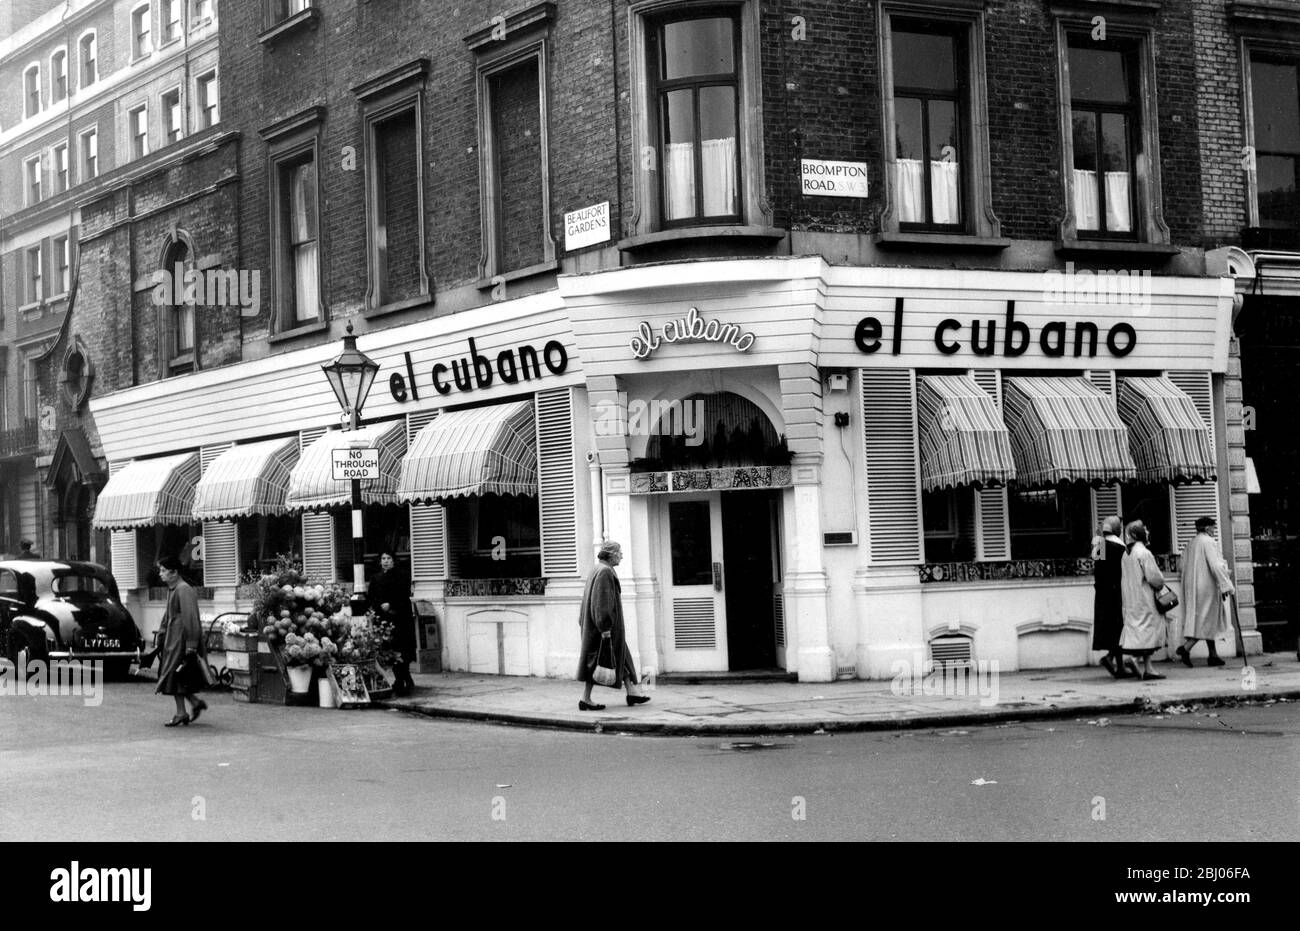 La maison de café El Cubano à Knightsbridge. - 11 novembre 1954 Banque D'Images